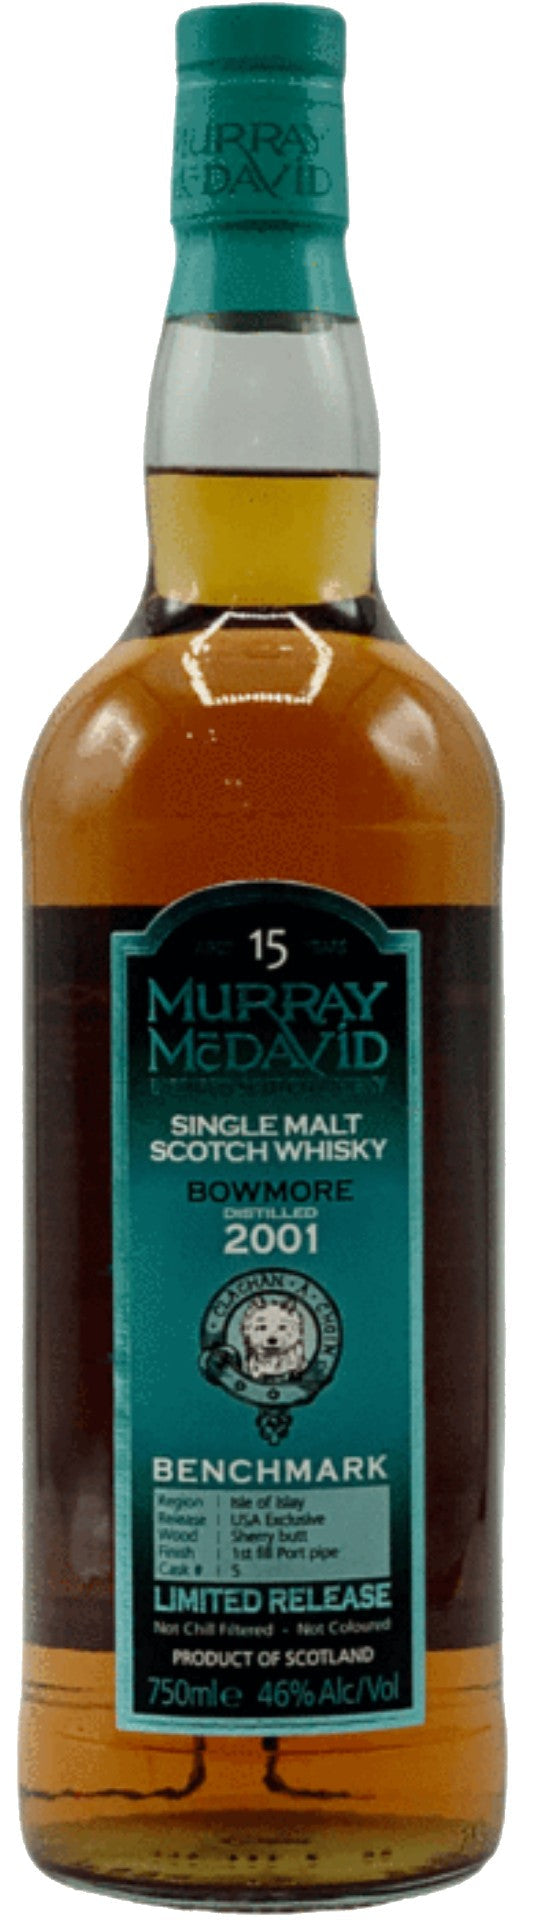 Murray McDavid Benchmark Bowmore 15 Year Old Single Malt Scotch Whisky